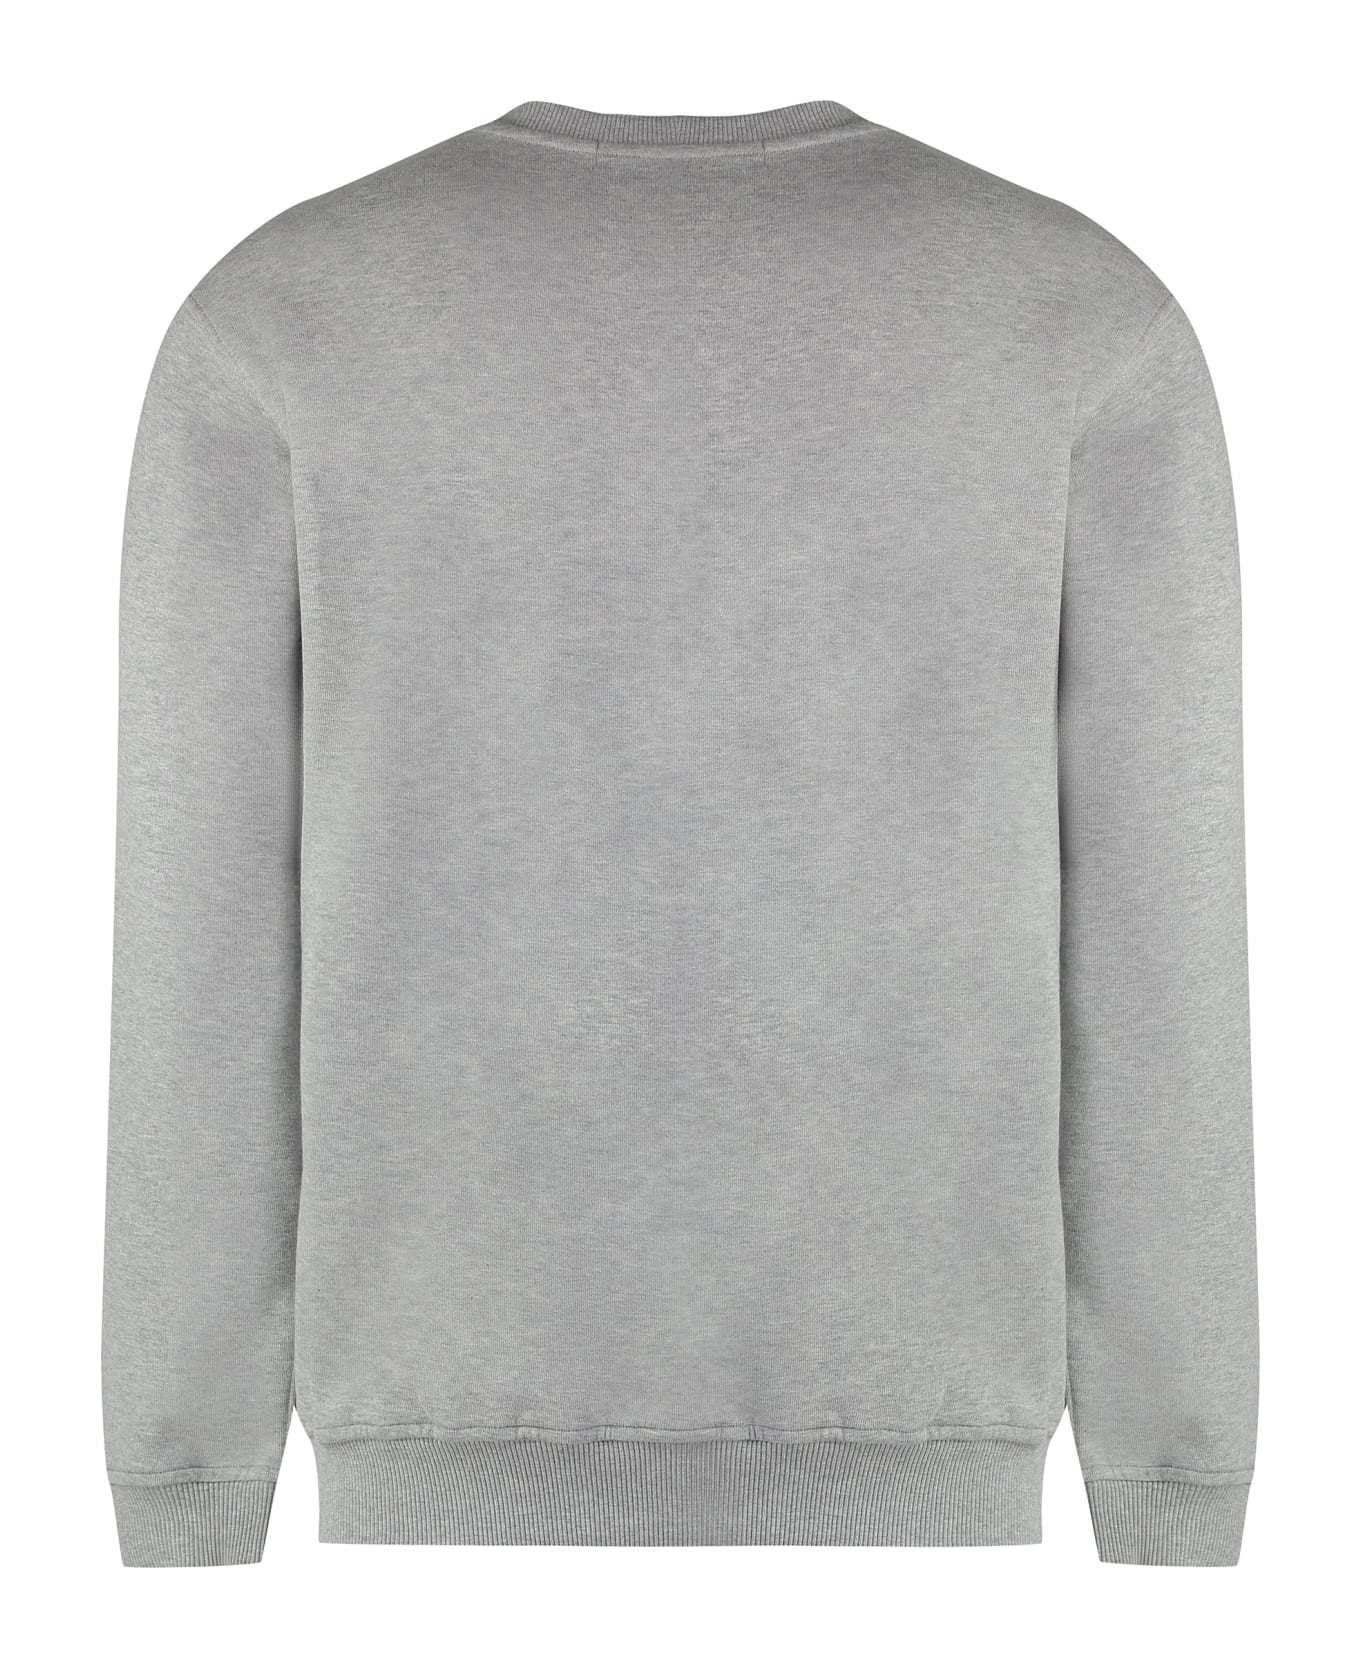 Comme des Garçons Shirt Andy Warhol Print Cotton Sweatshirt - grey フリース